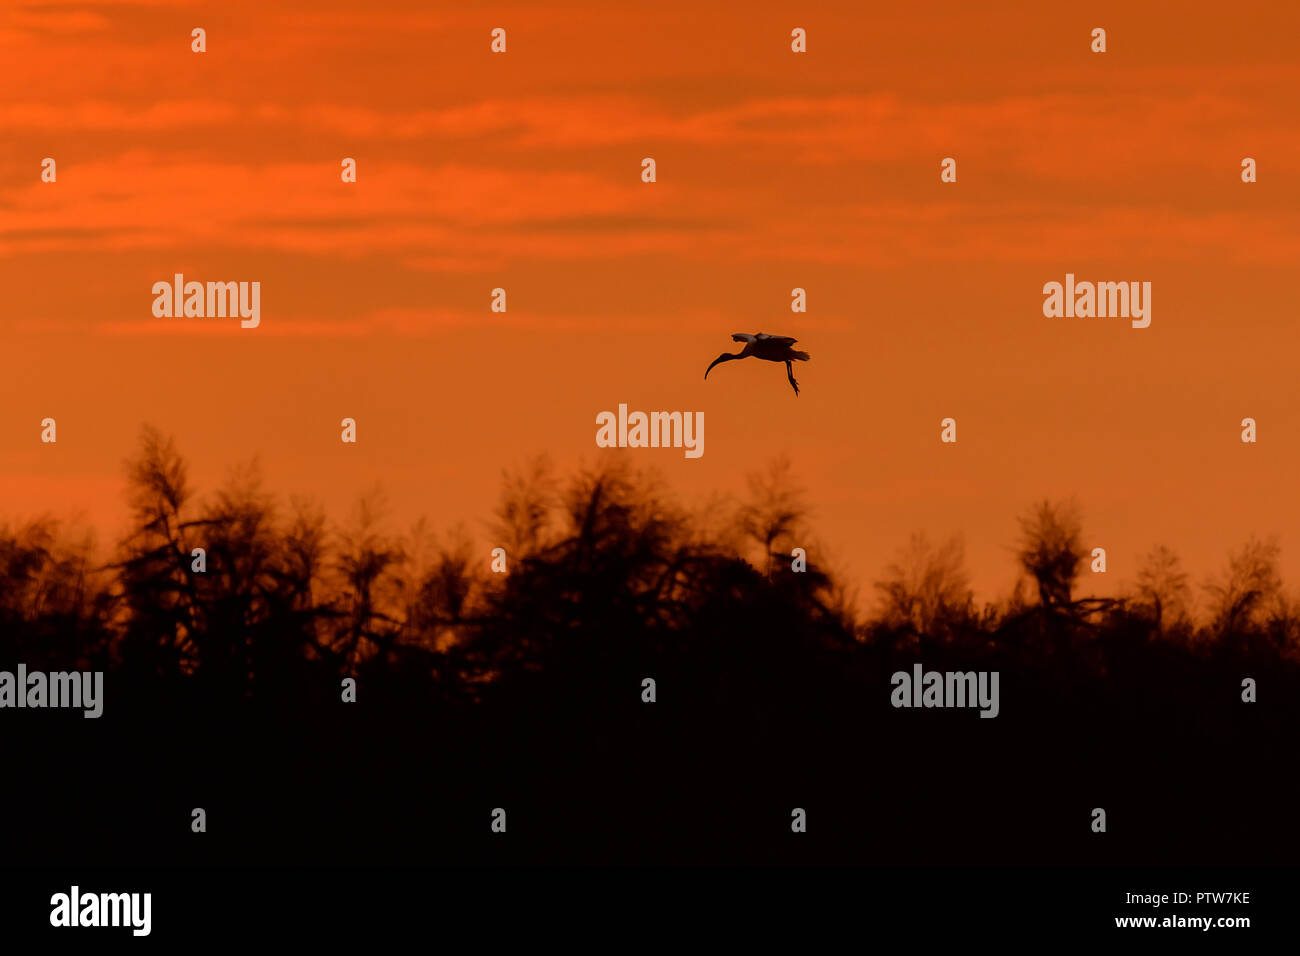 Ibis bird flying at sunset Stock Photo